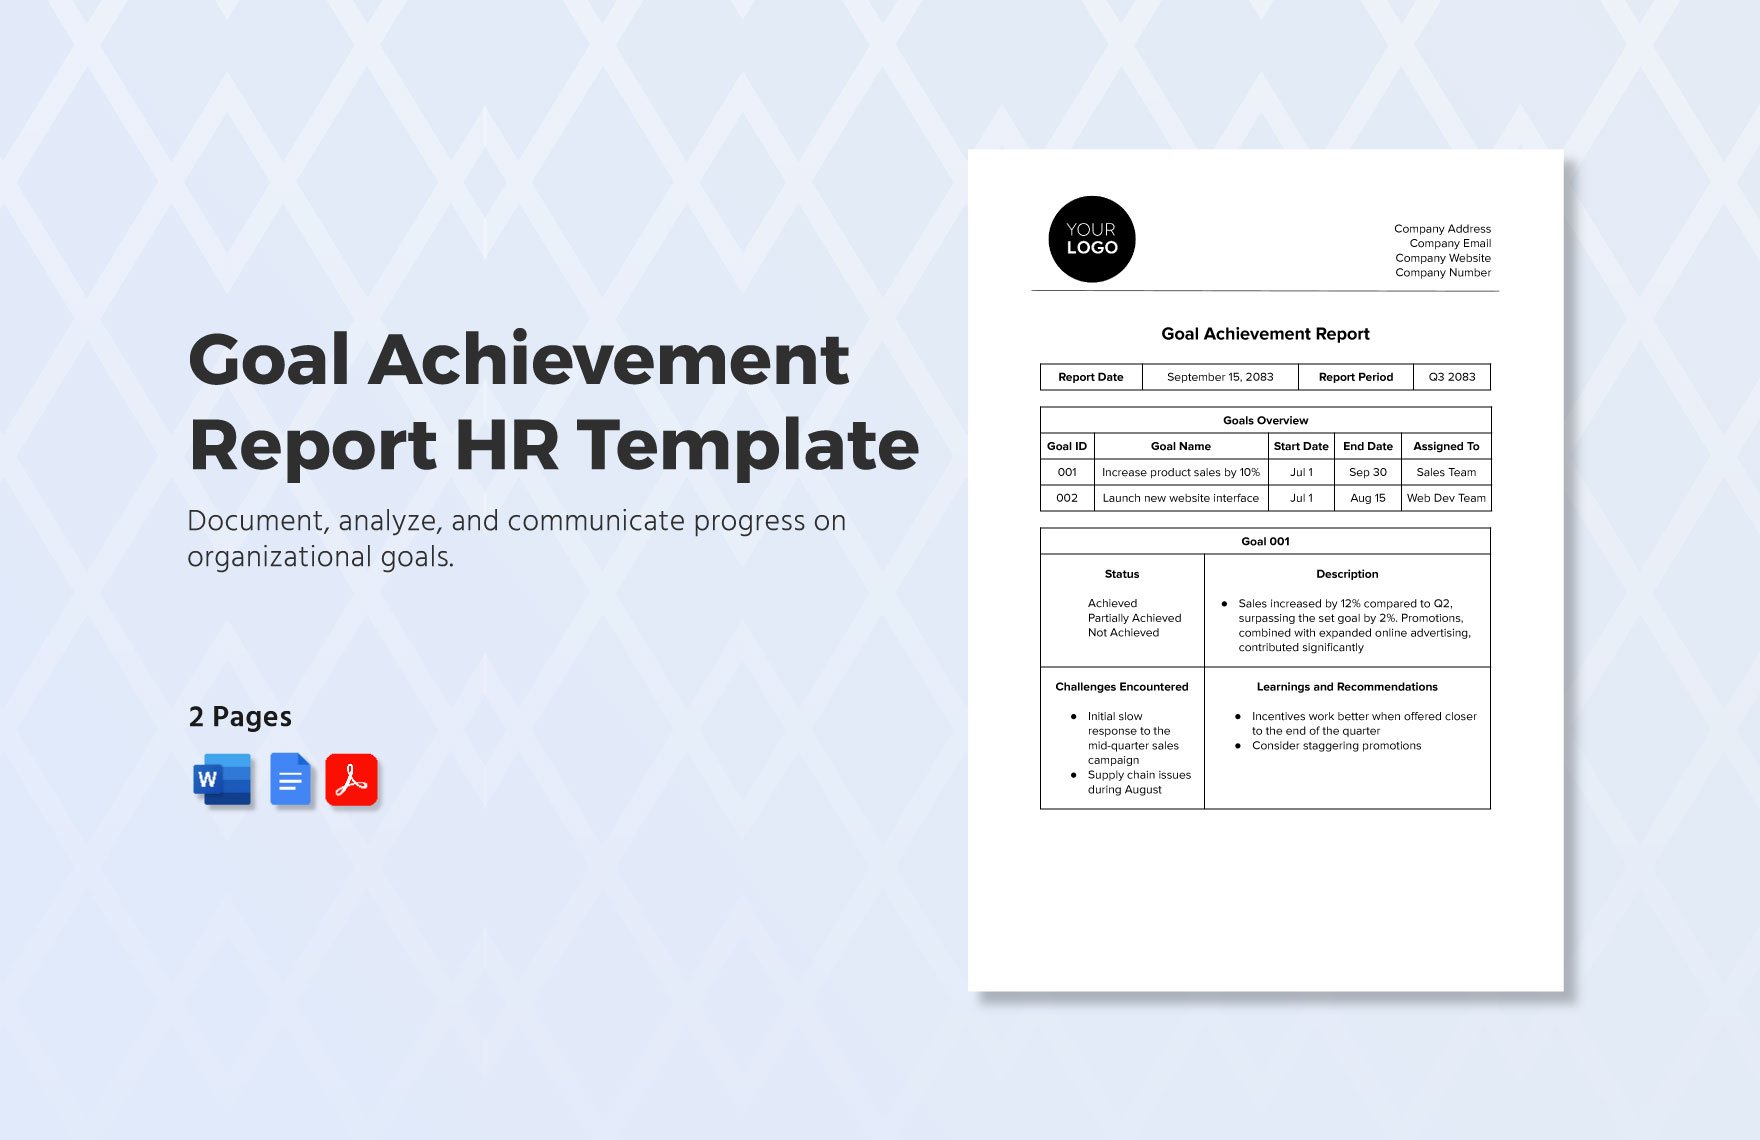 Goal Achievement Report HR Template